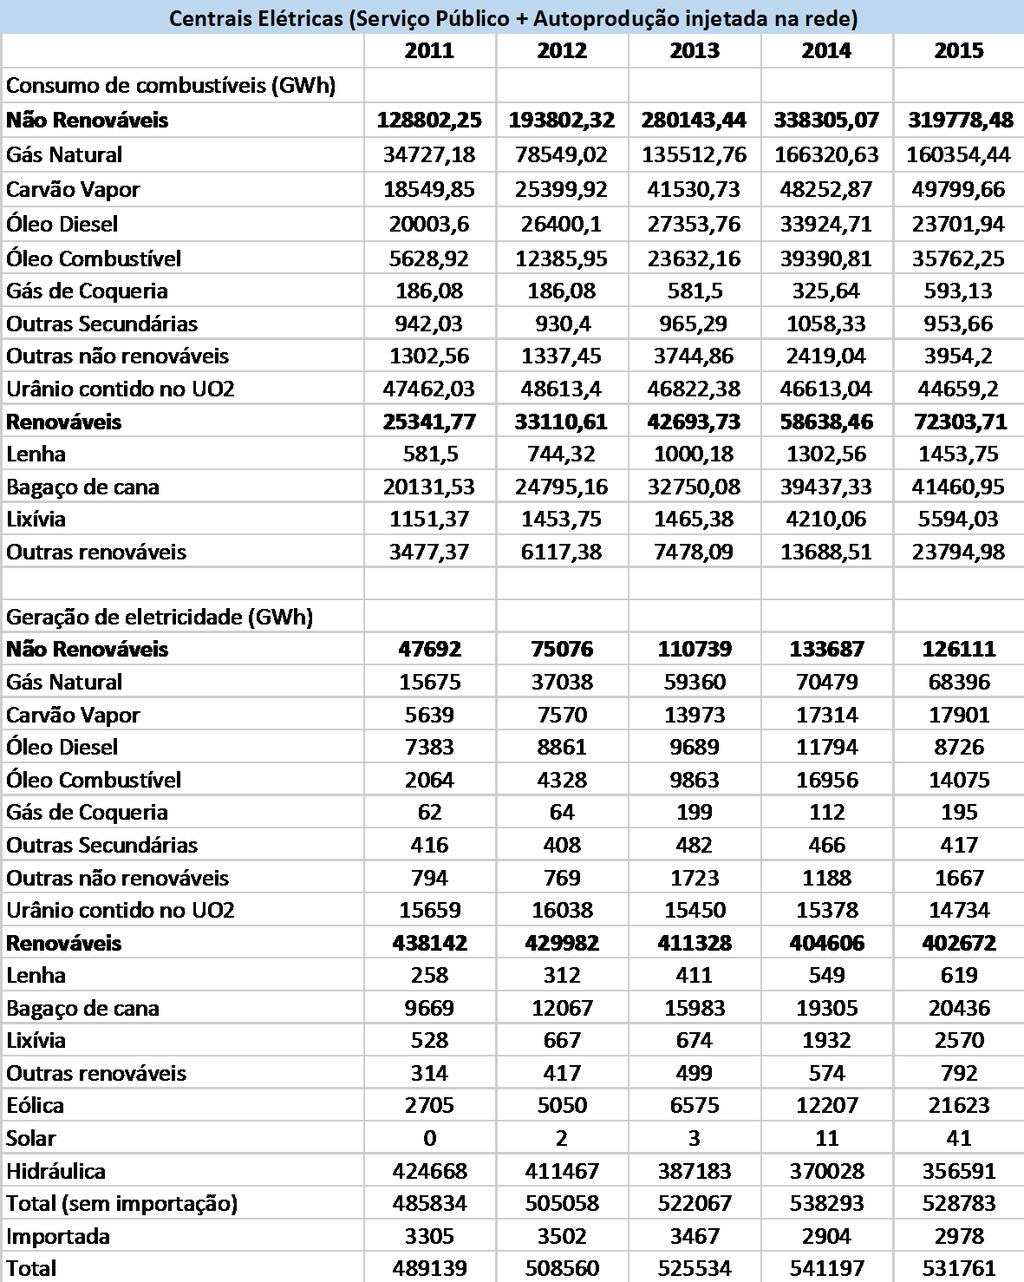 Tabela 7 - Centrais elétricas (Serviço Público + Autoprodutoras injetadas